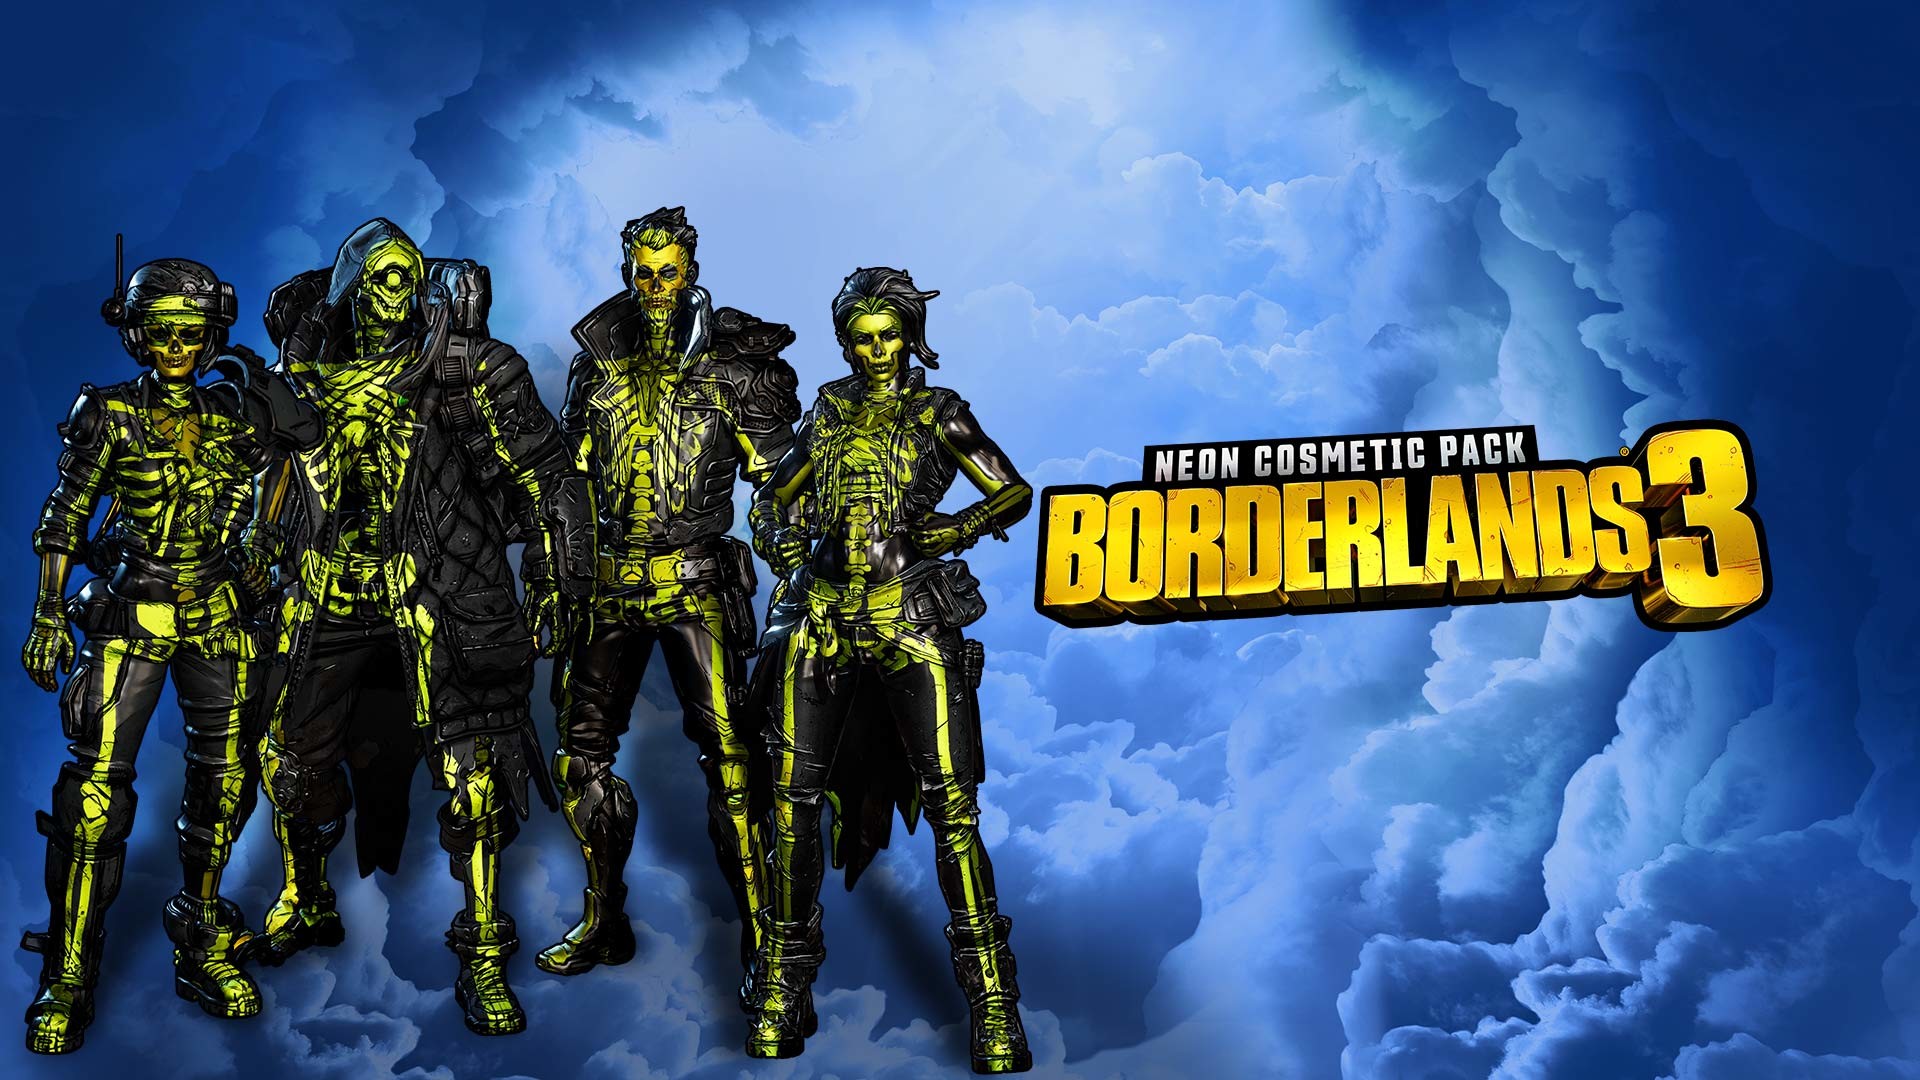 Borderlands 3: Neon Cosmetic Pack Featured Screenshot #1